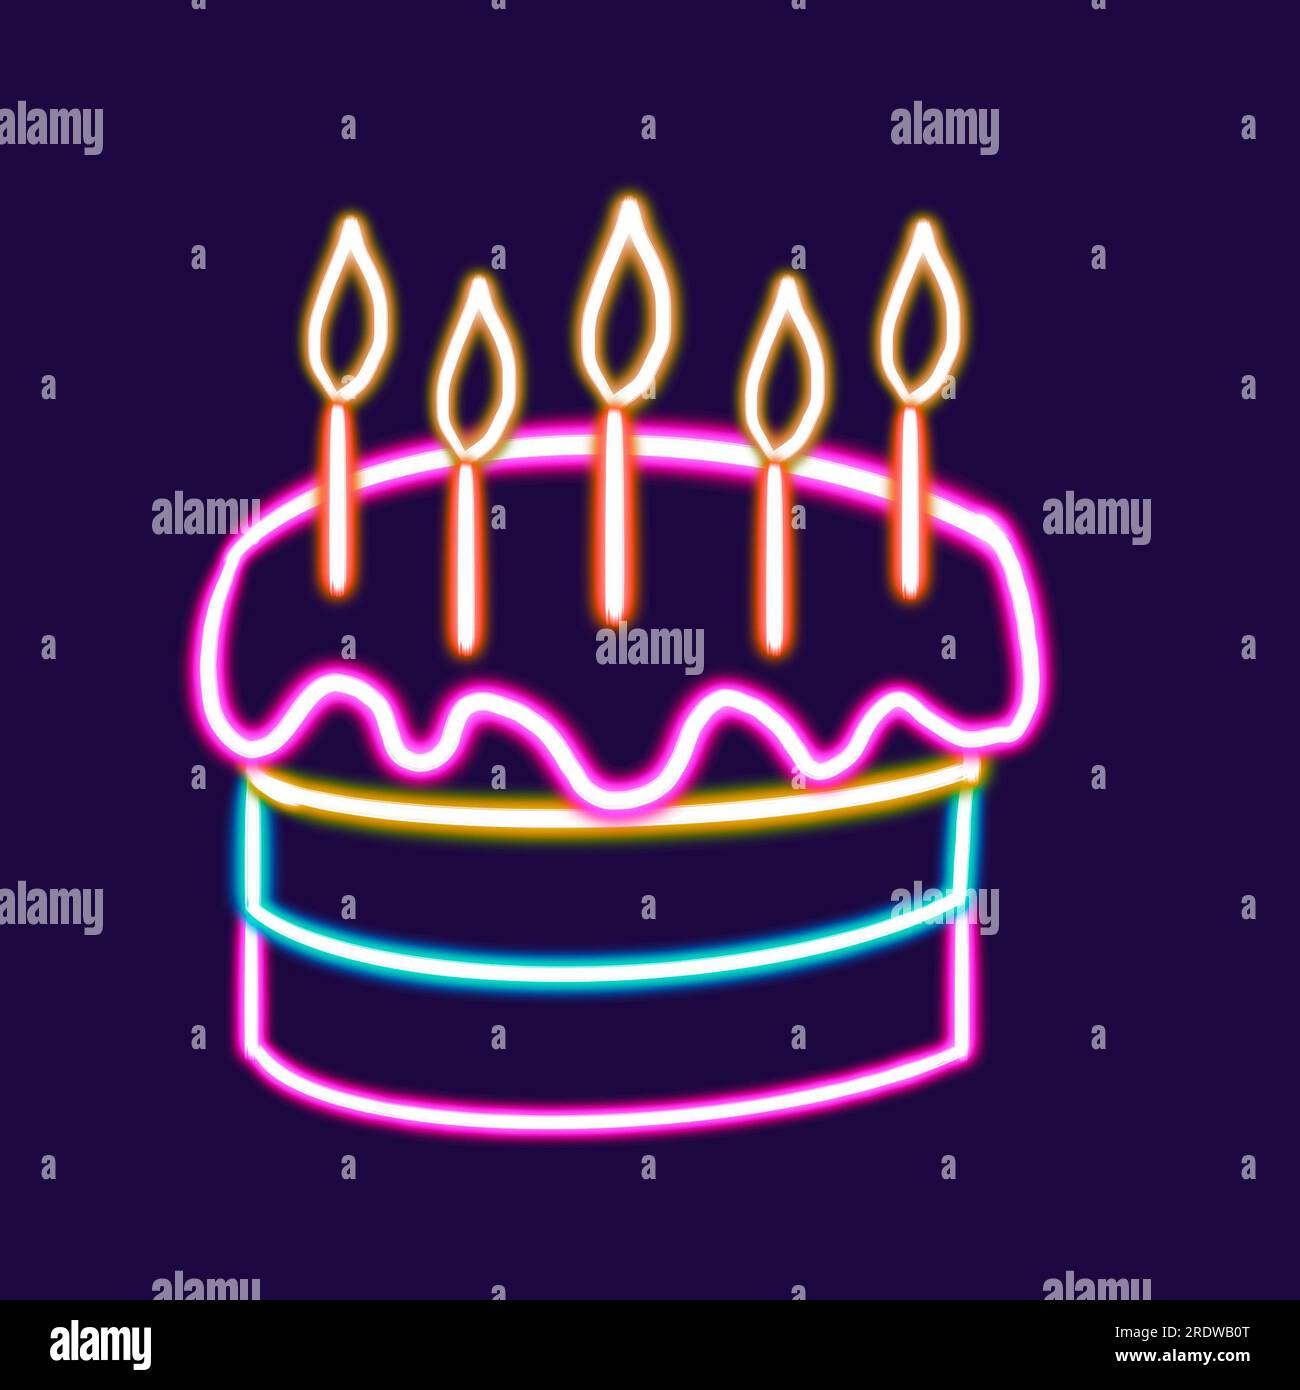 birthday cake with candles glowing desktop icon, cake neon sticker, neon figure, glowing figure, neon geometrical figures  Stock Photo